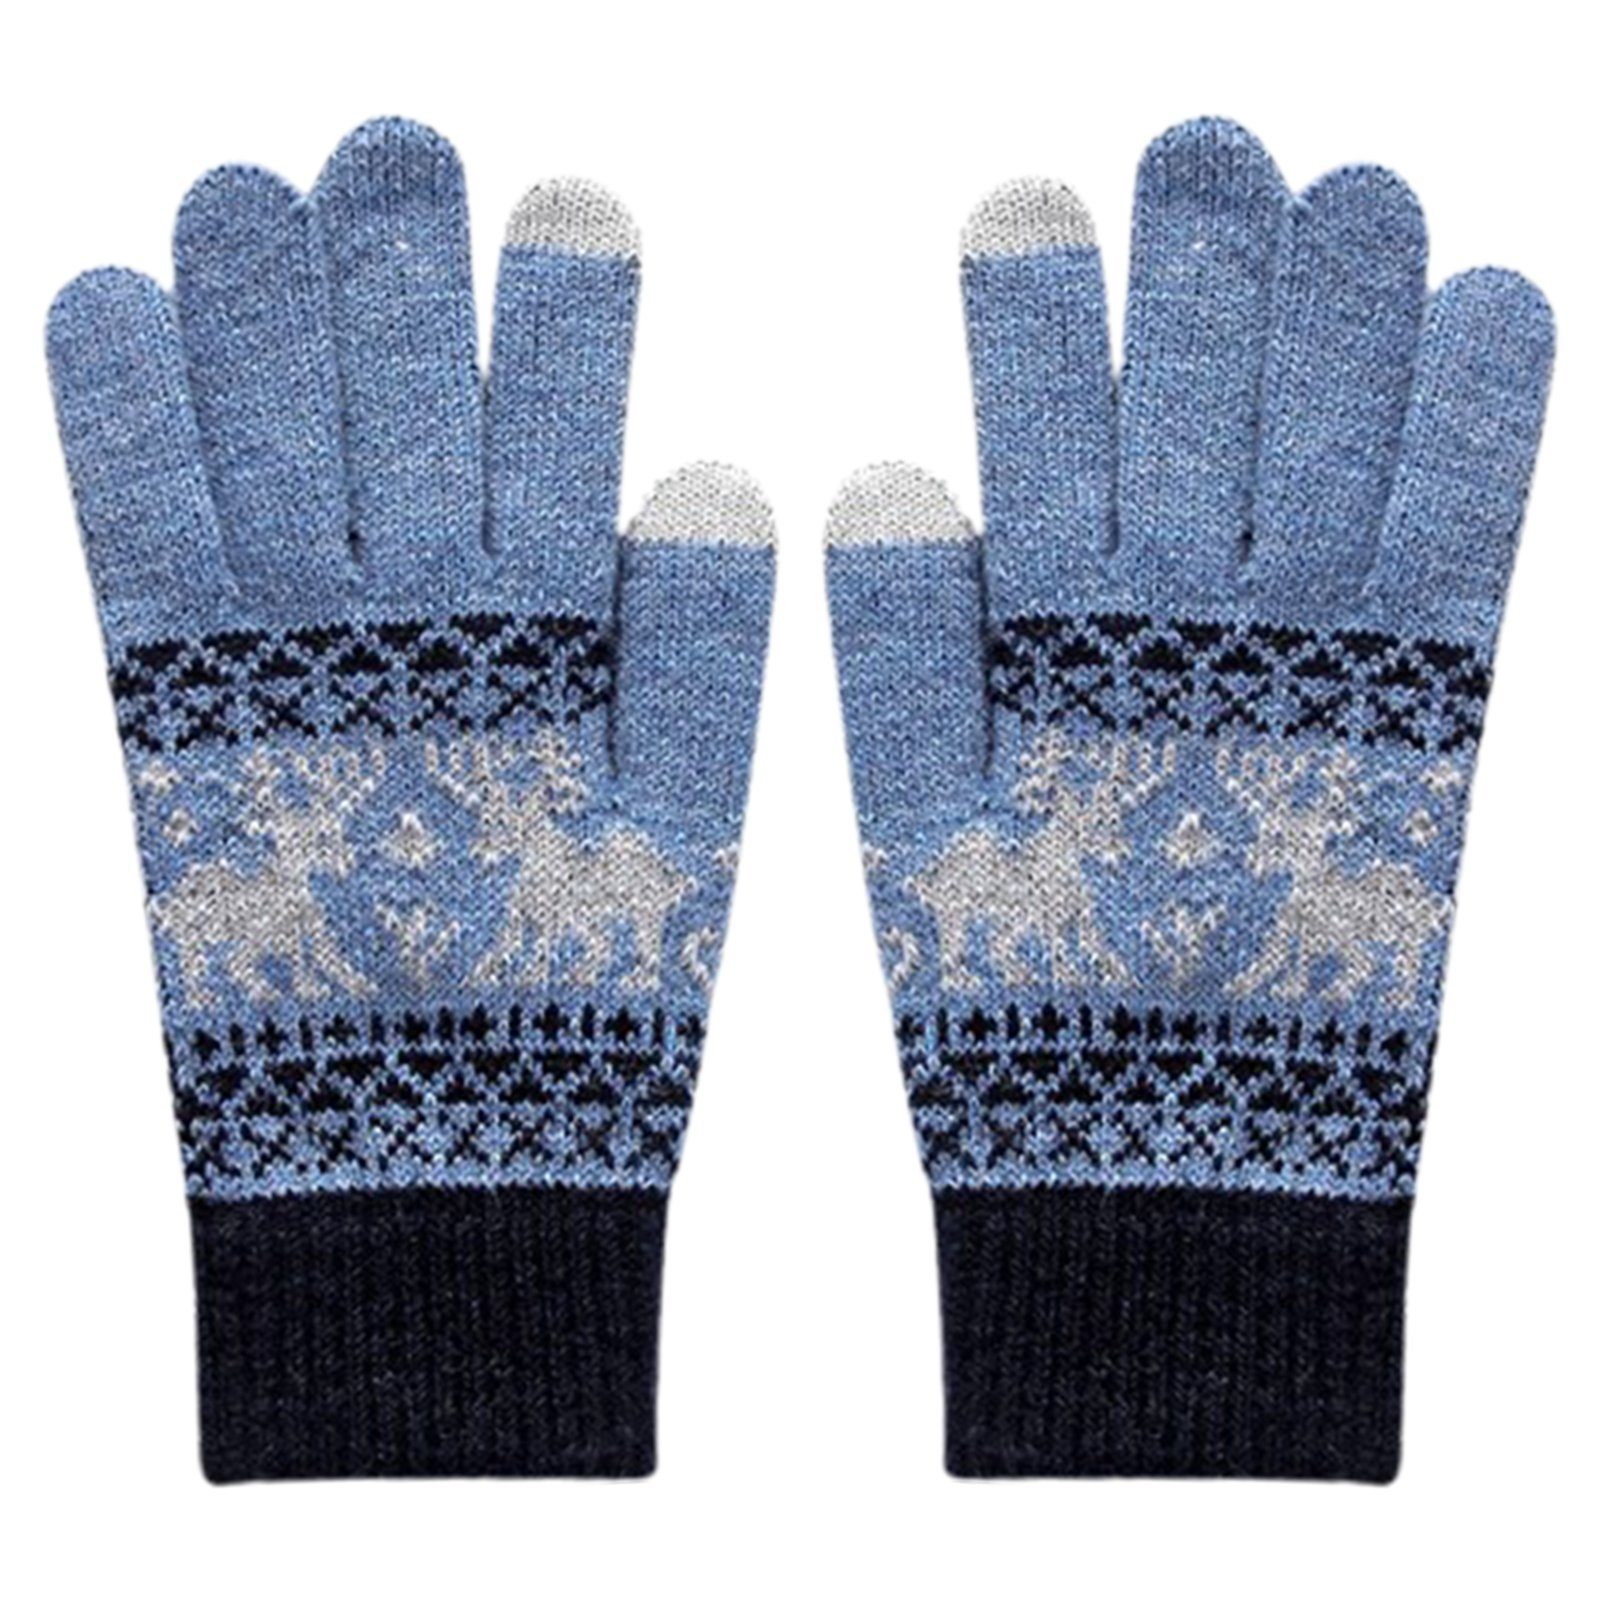 Blusmart Strickhandschuhe Verdickte Wärmende Damenhandschuhe, Gestrickte Touchscreen-Handschuhe Fleecehandschuhe himmelblau marineblau